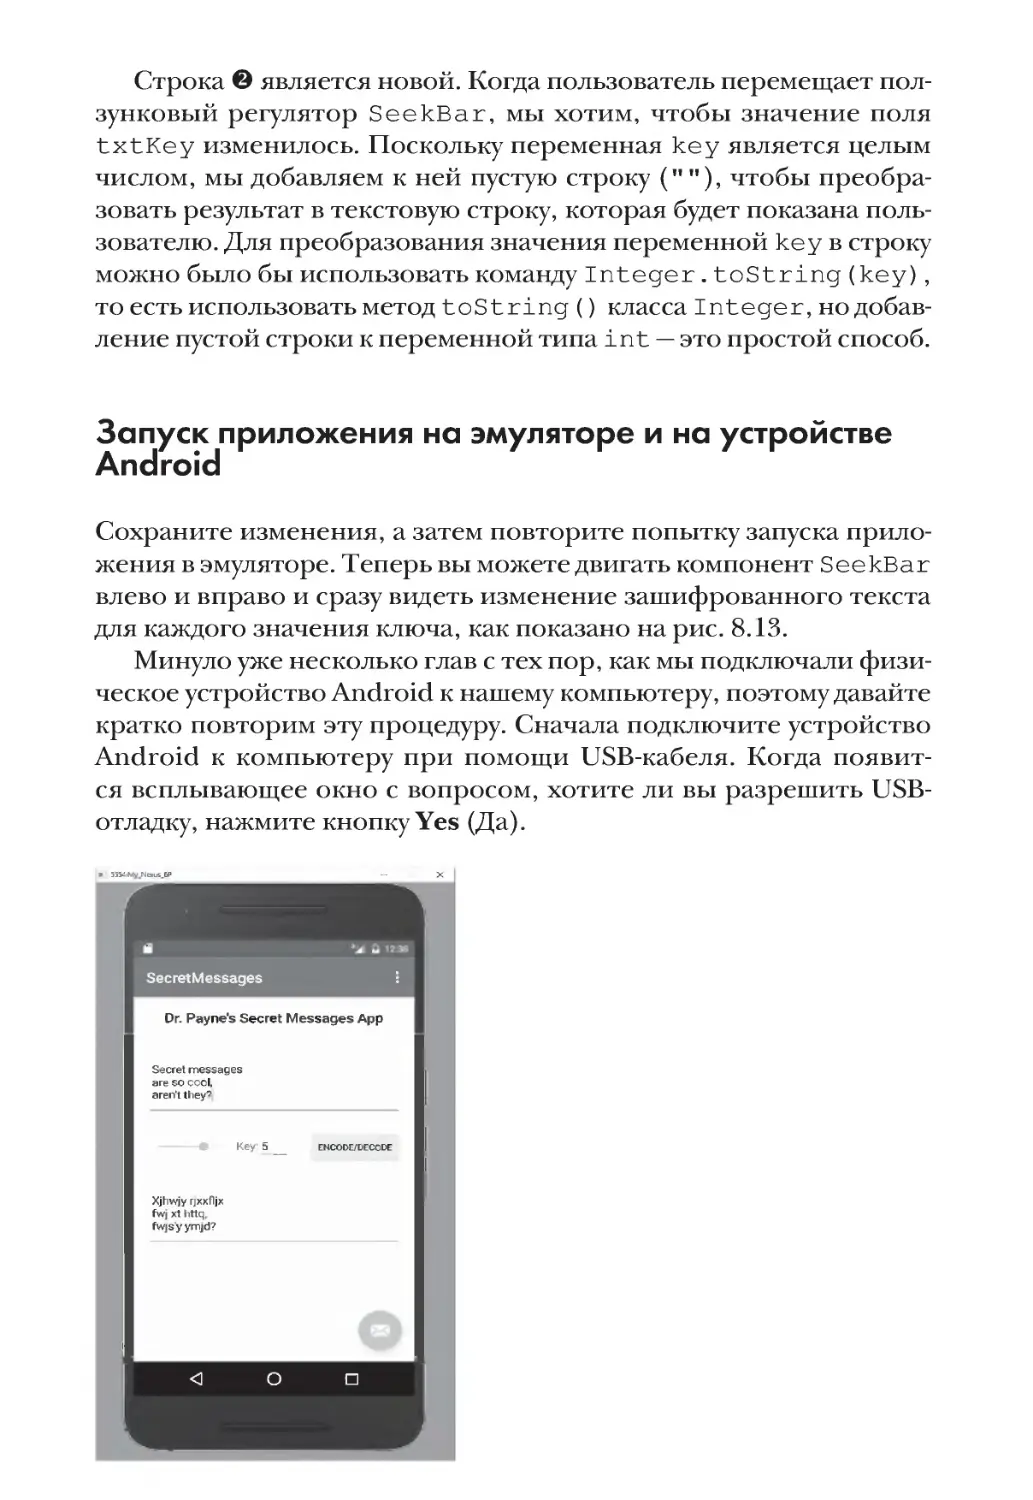 Запуск приложения на эмуляторе и на устройстве Android